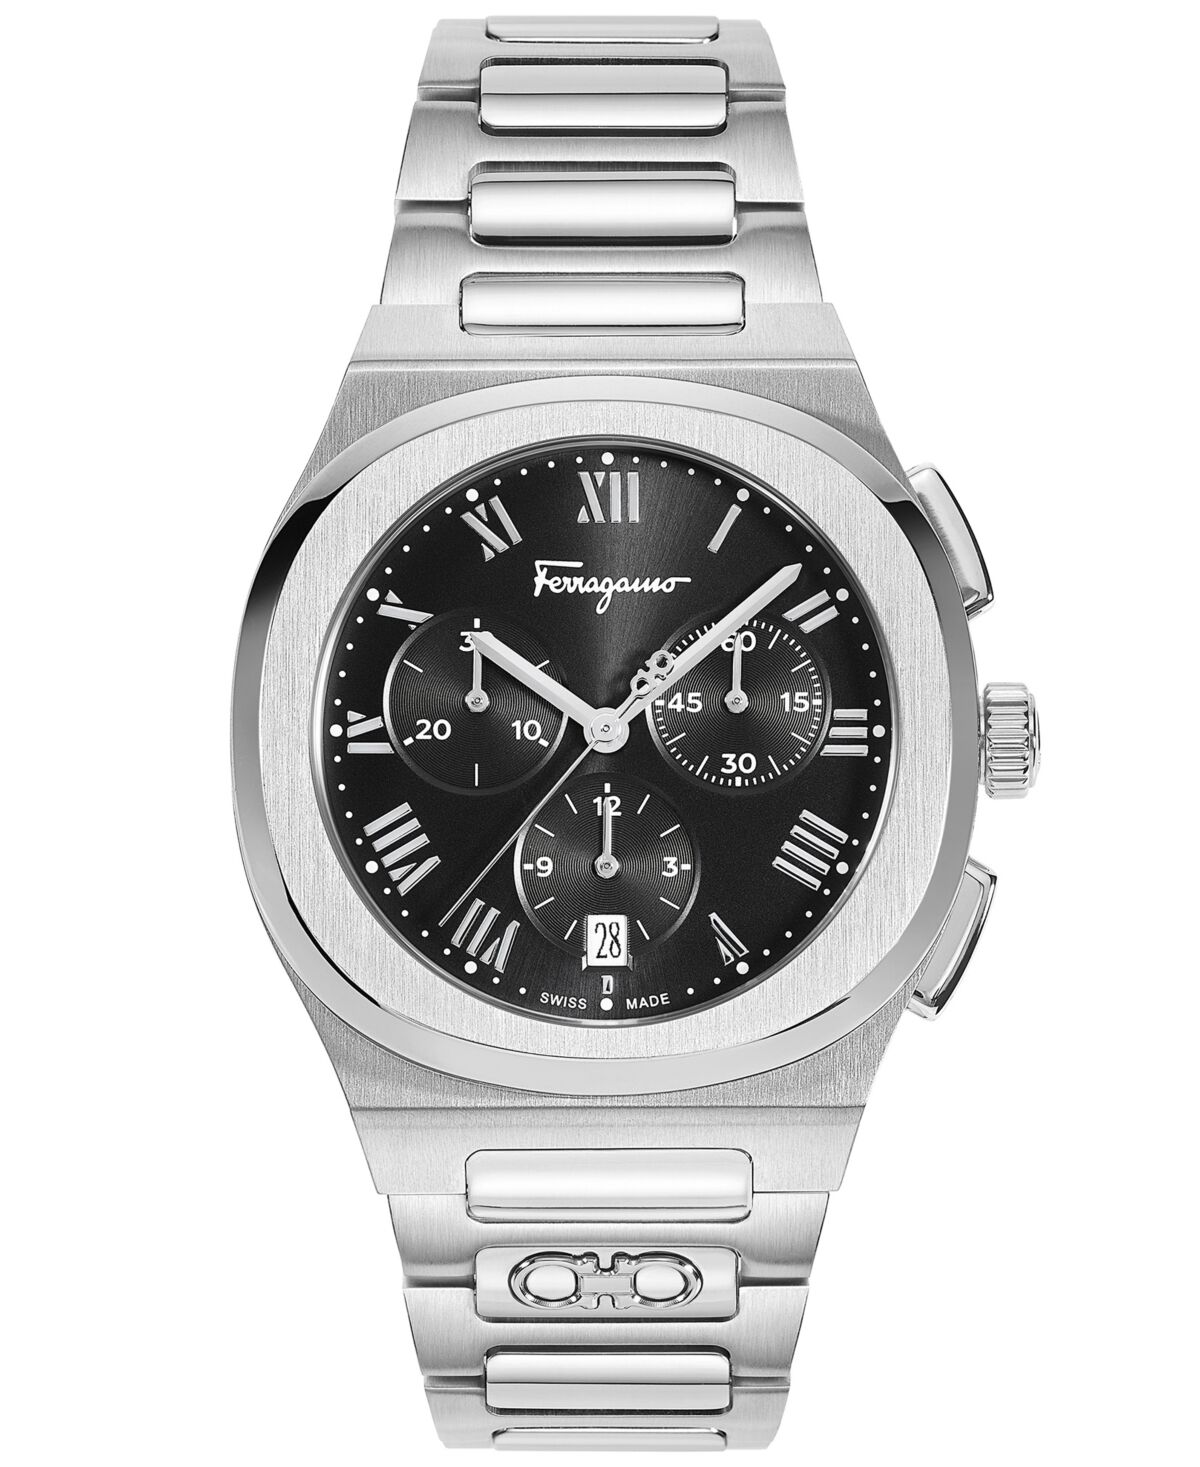 Salvatore Ferragamo Men's Swiss Chronograph Elliptical Stainless Steel Bracelet Watch 38mm - Stainless Steel